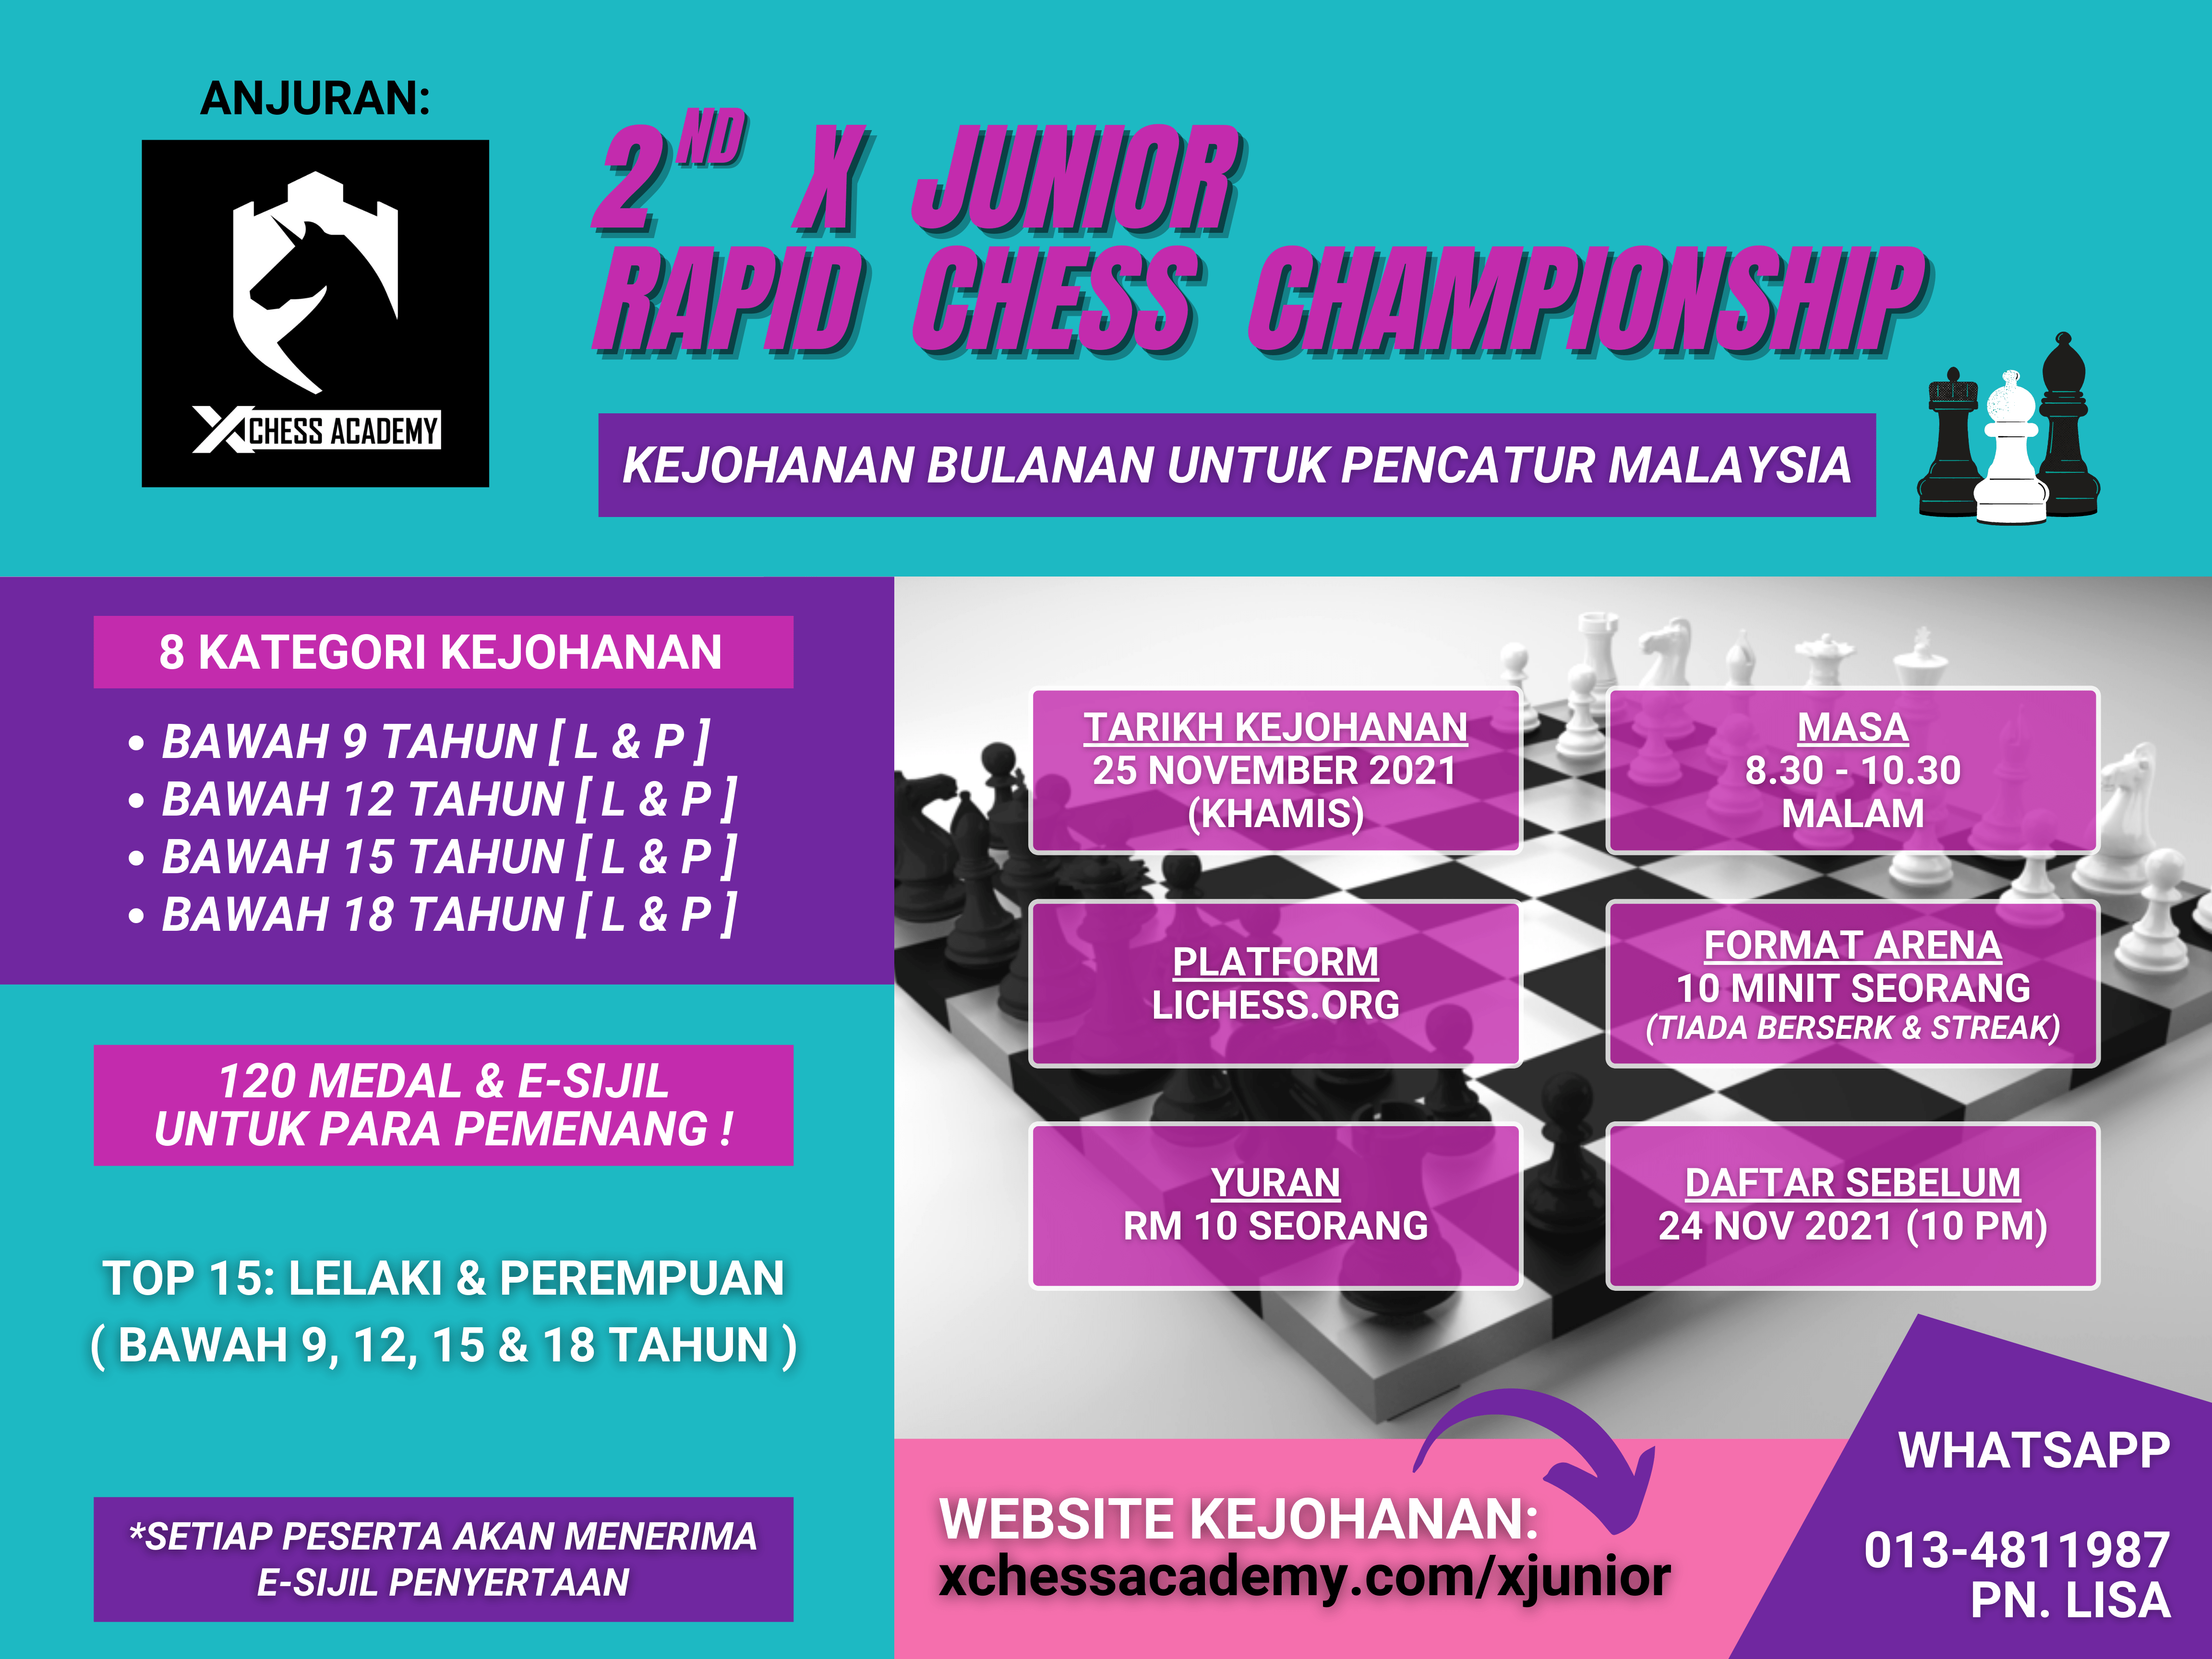 25 Nov 2021, 2nd X Junior Rapid Chess Championship X Chess Academy